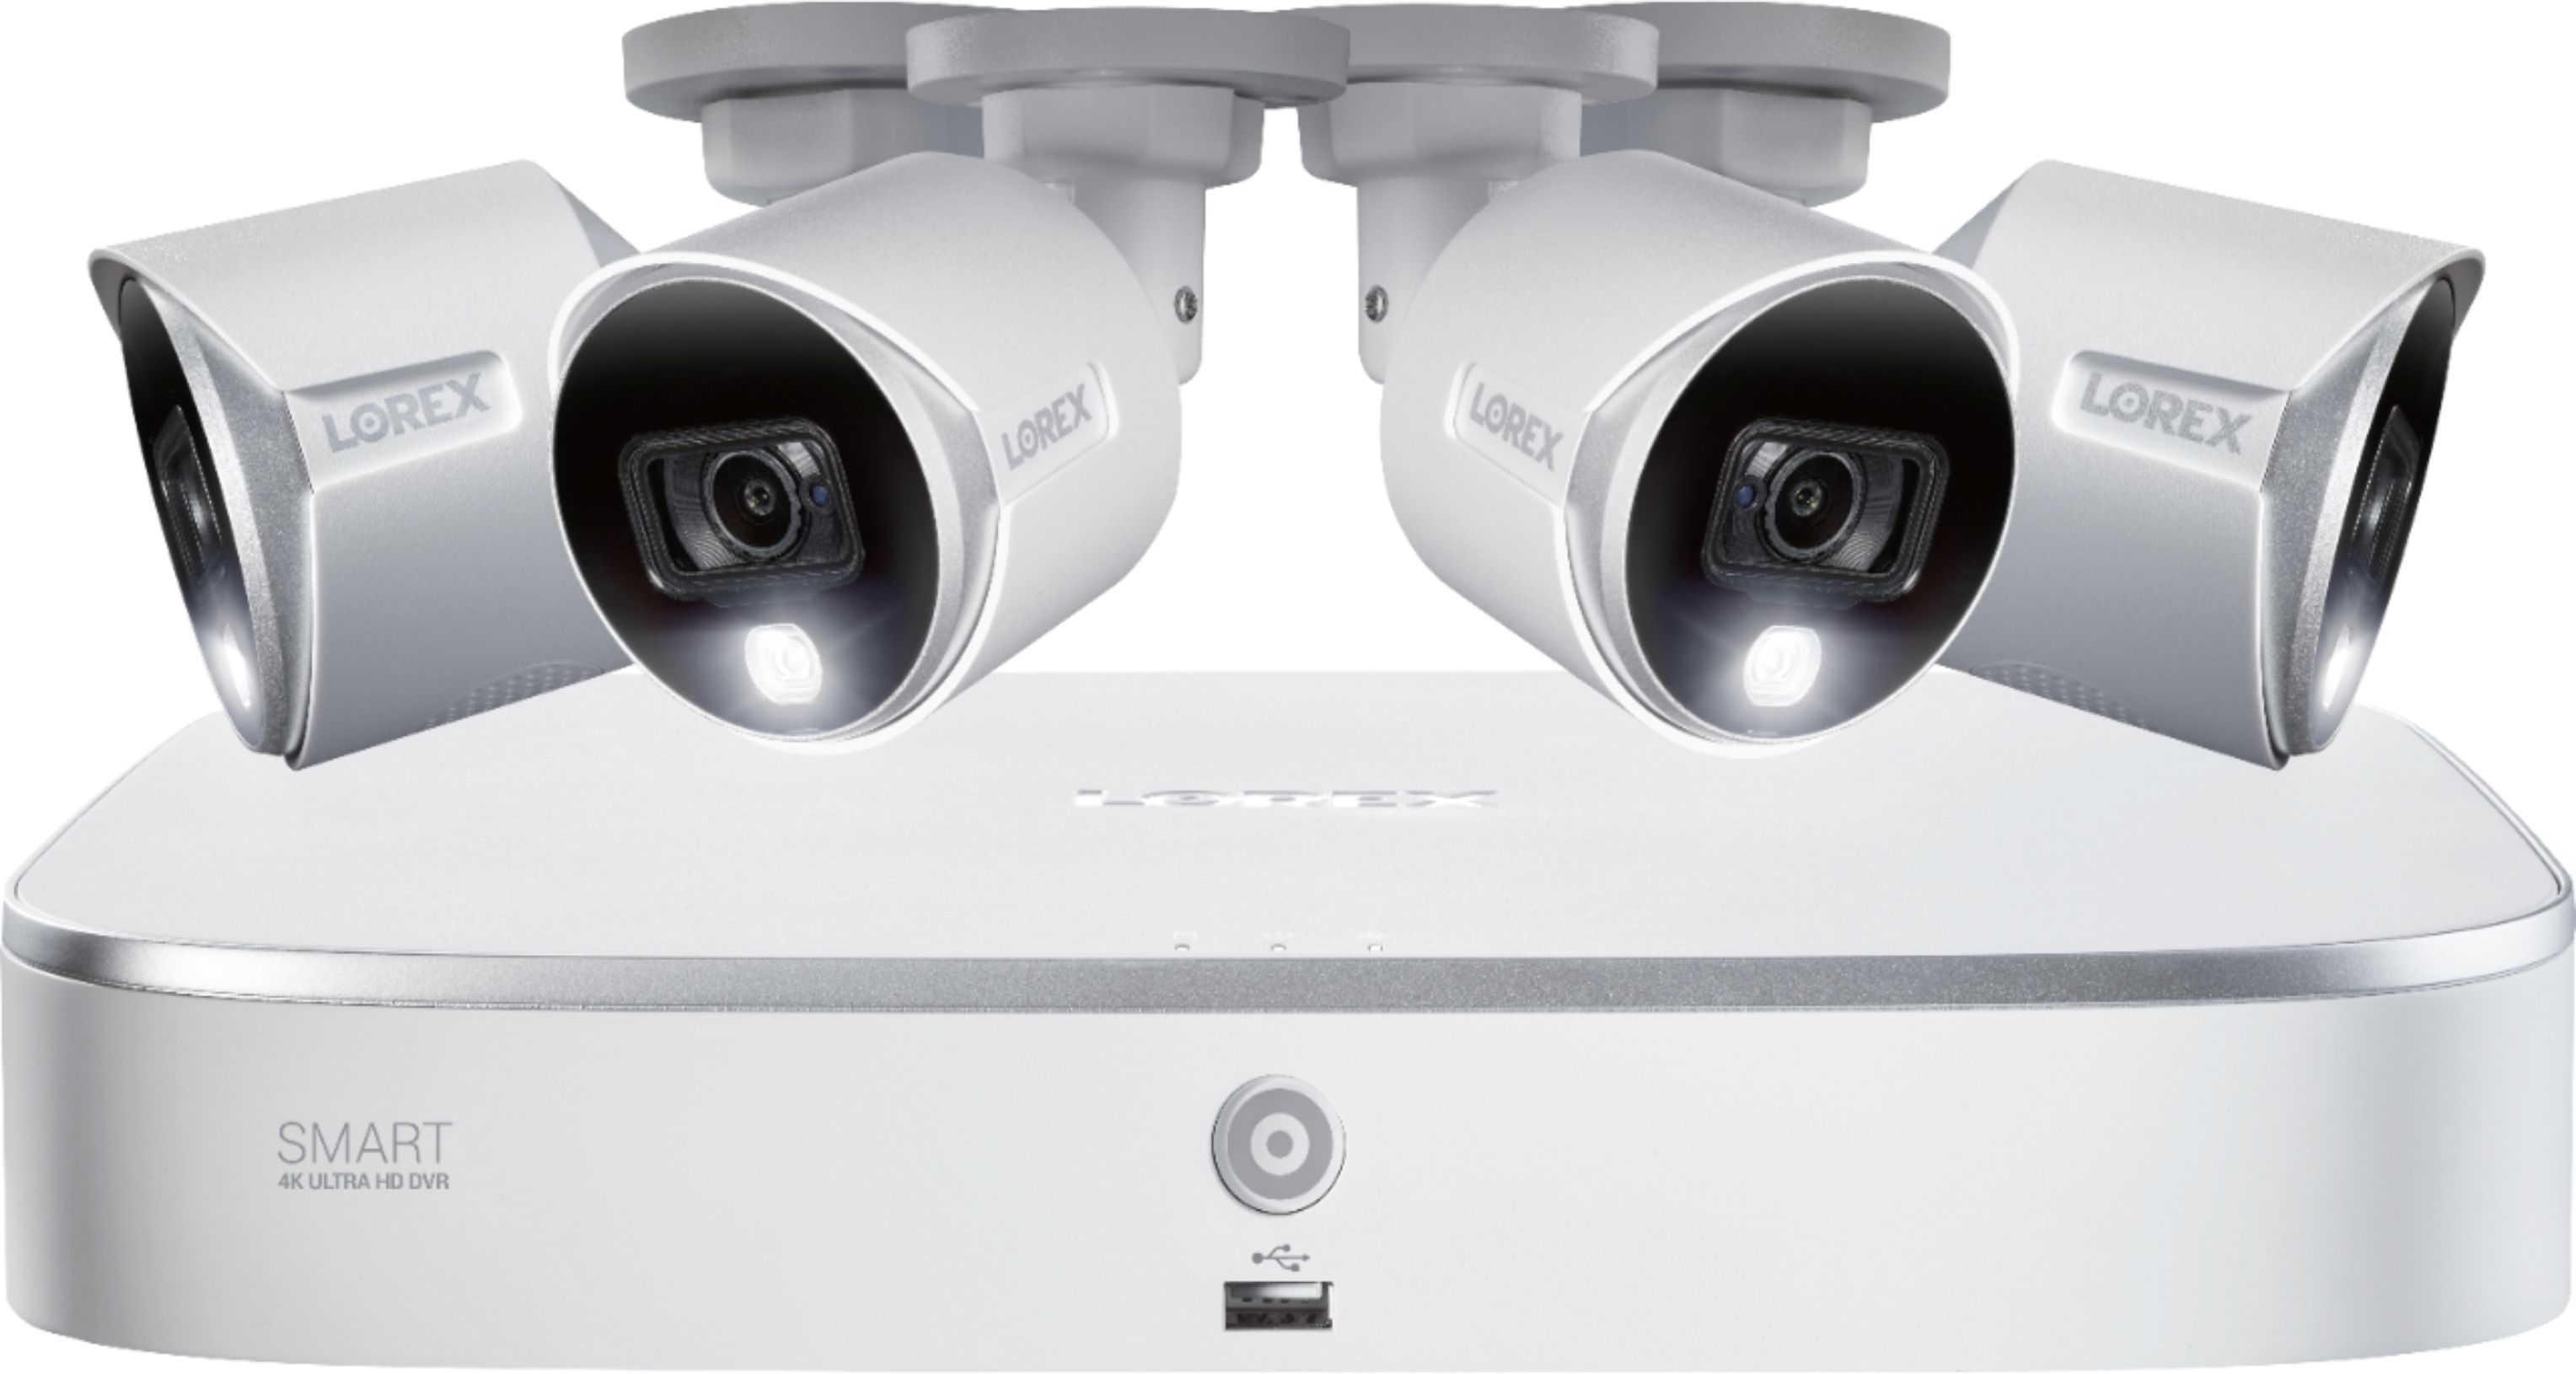 8 channel surveillance dvr with 4 hd cameras